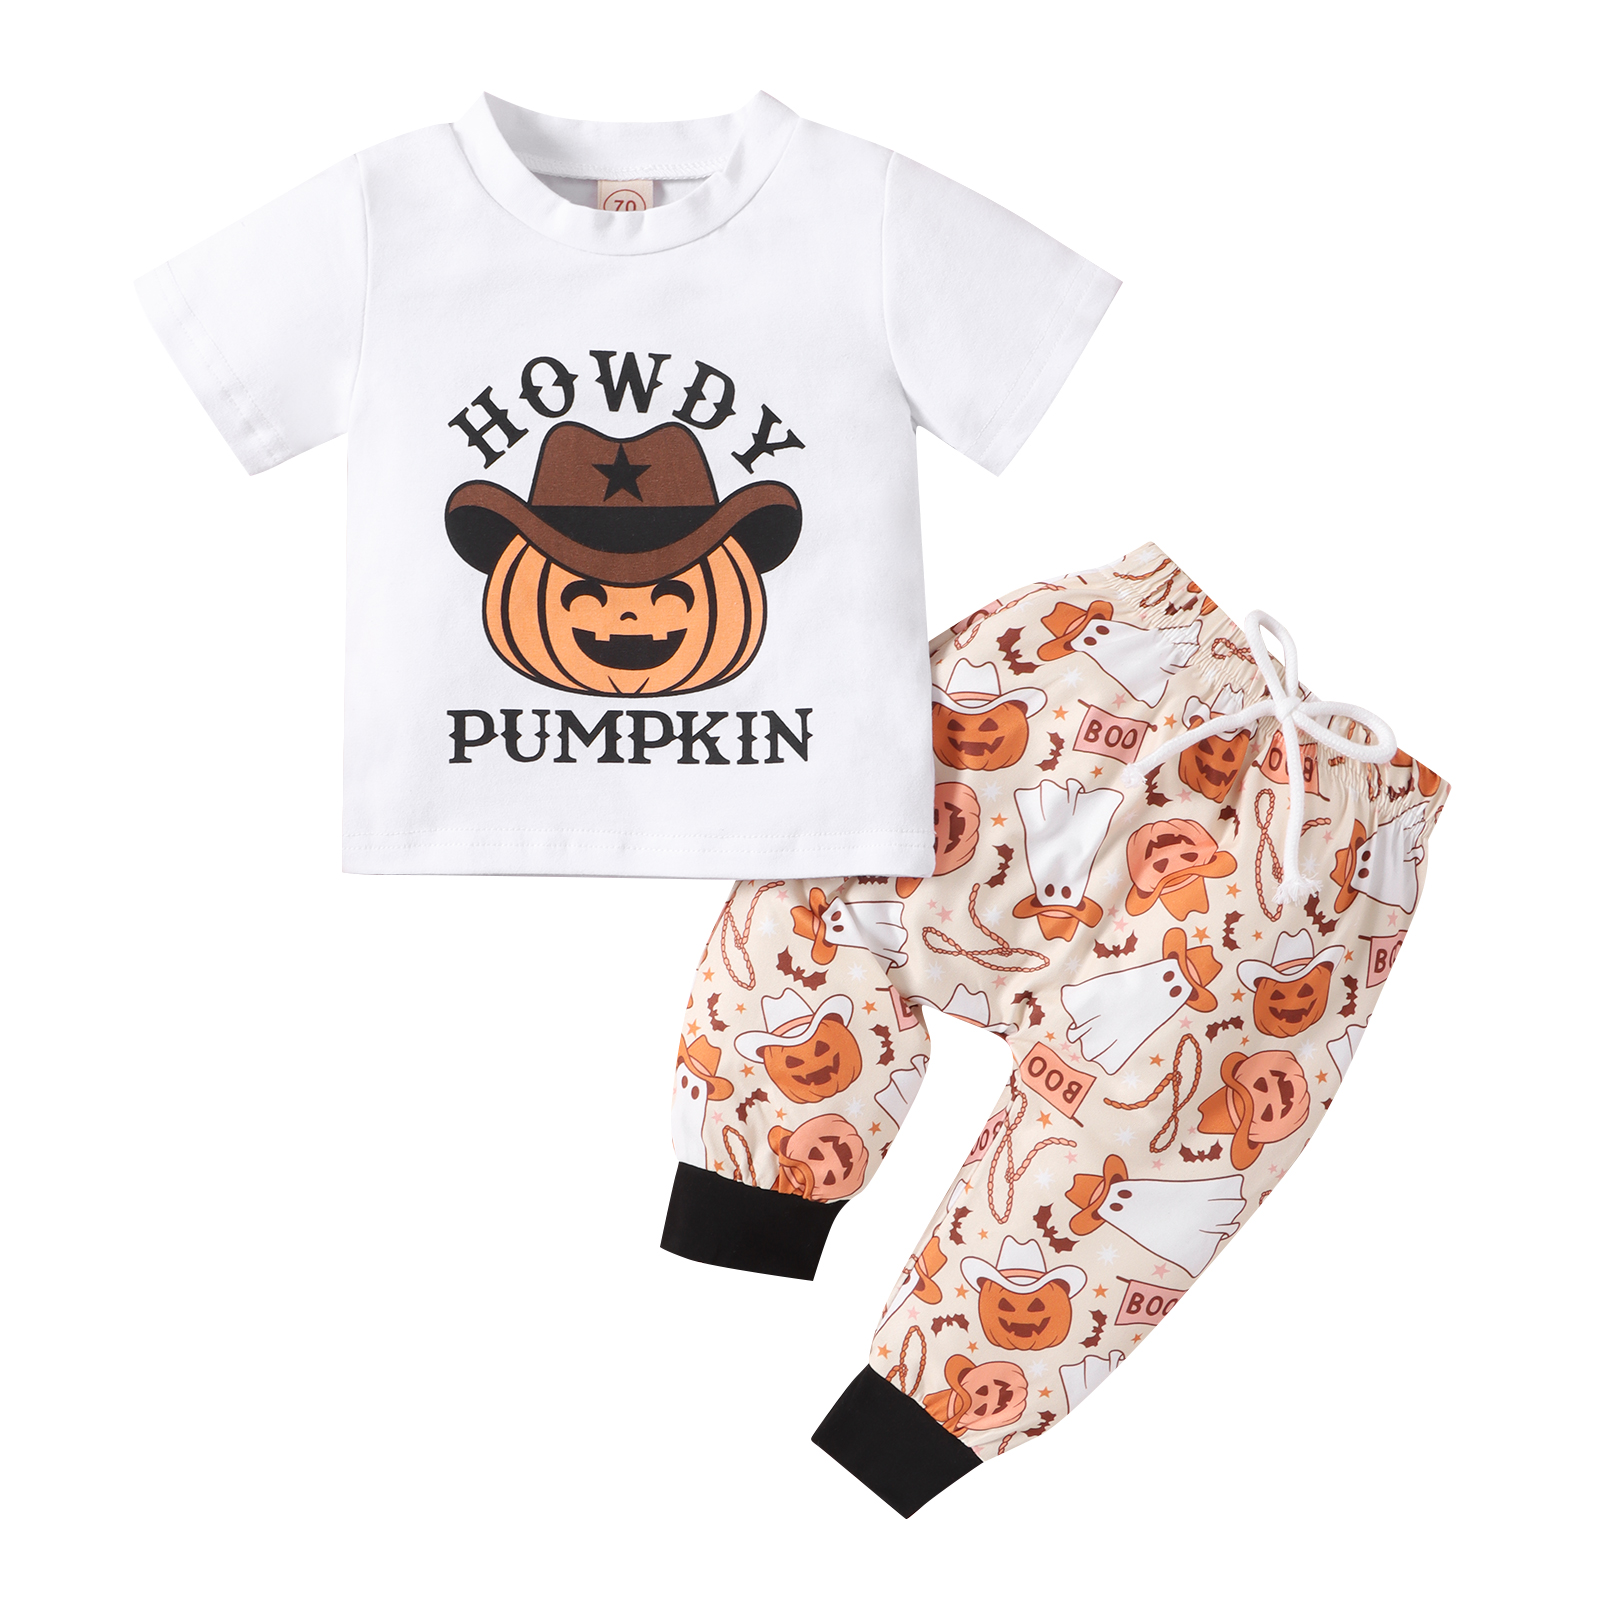 Baby Howdy Pumpkin Set